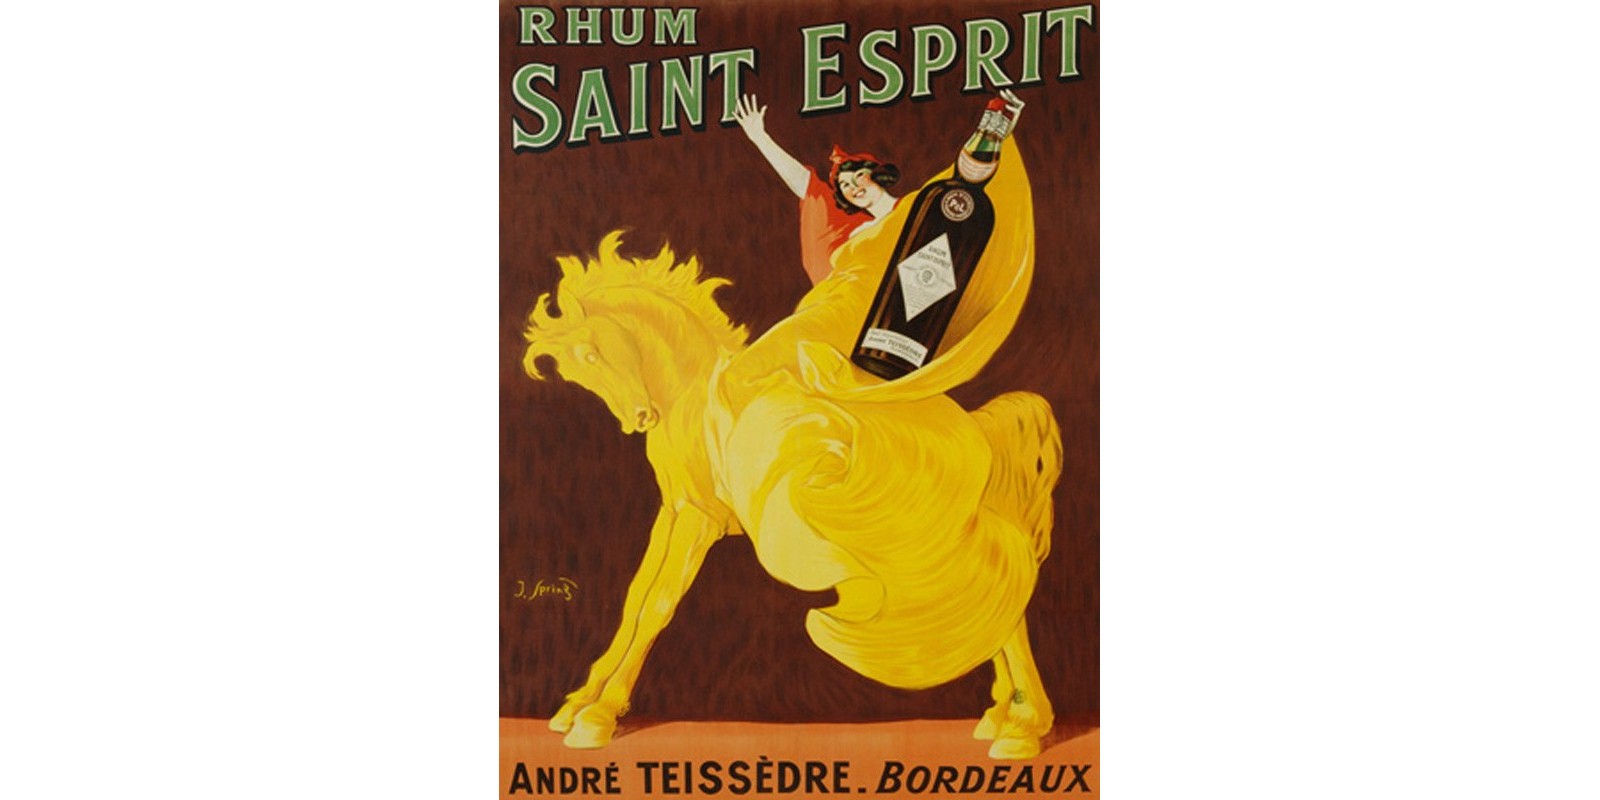 J. SPRING - Rhum Saint Esprit, 1919